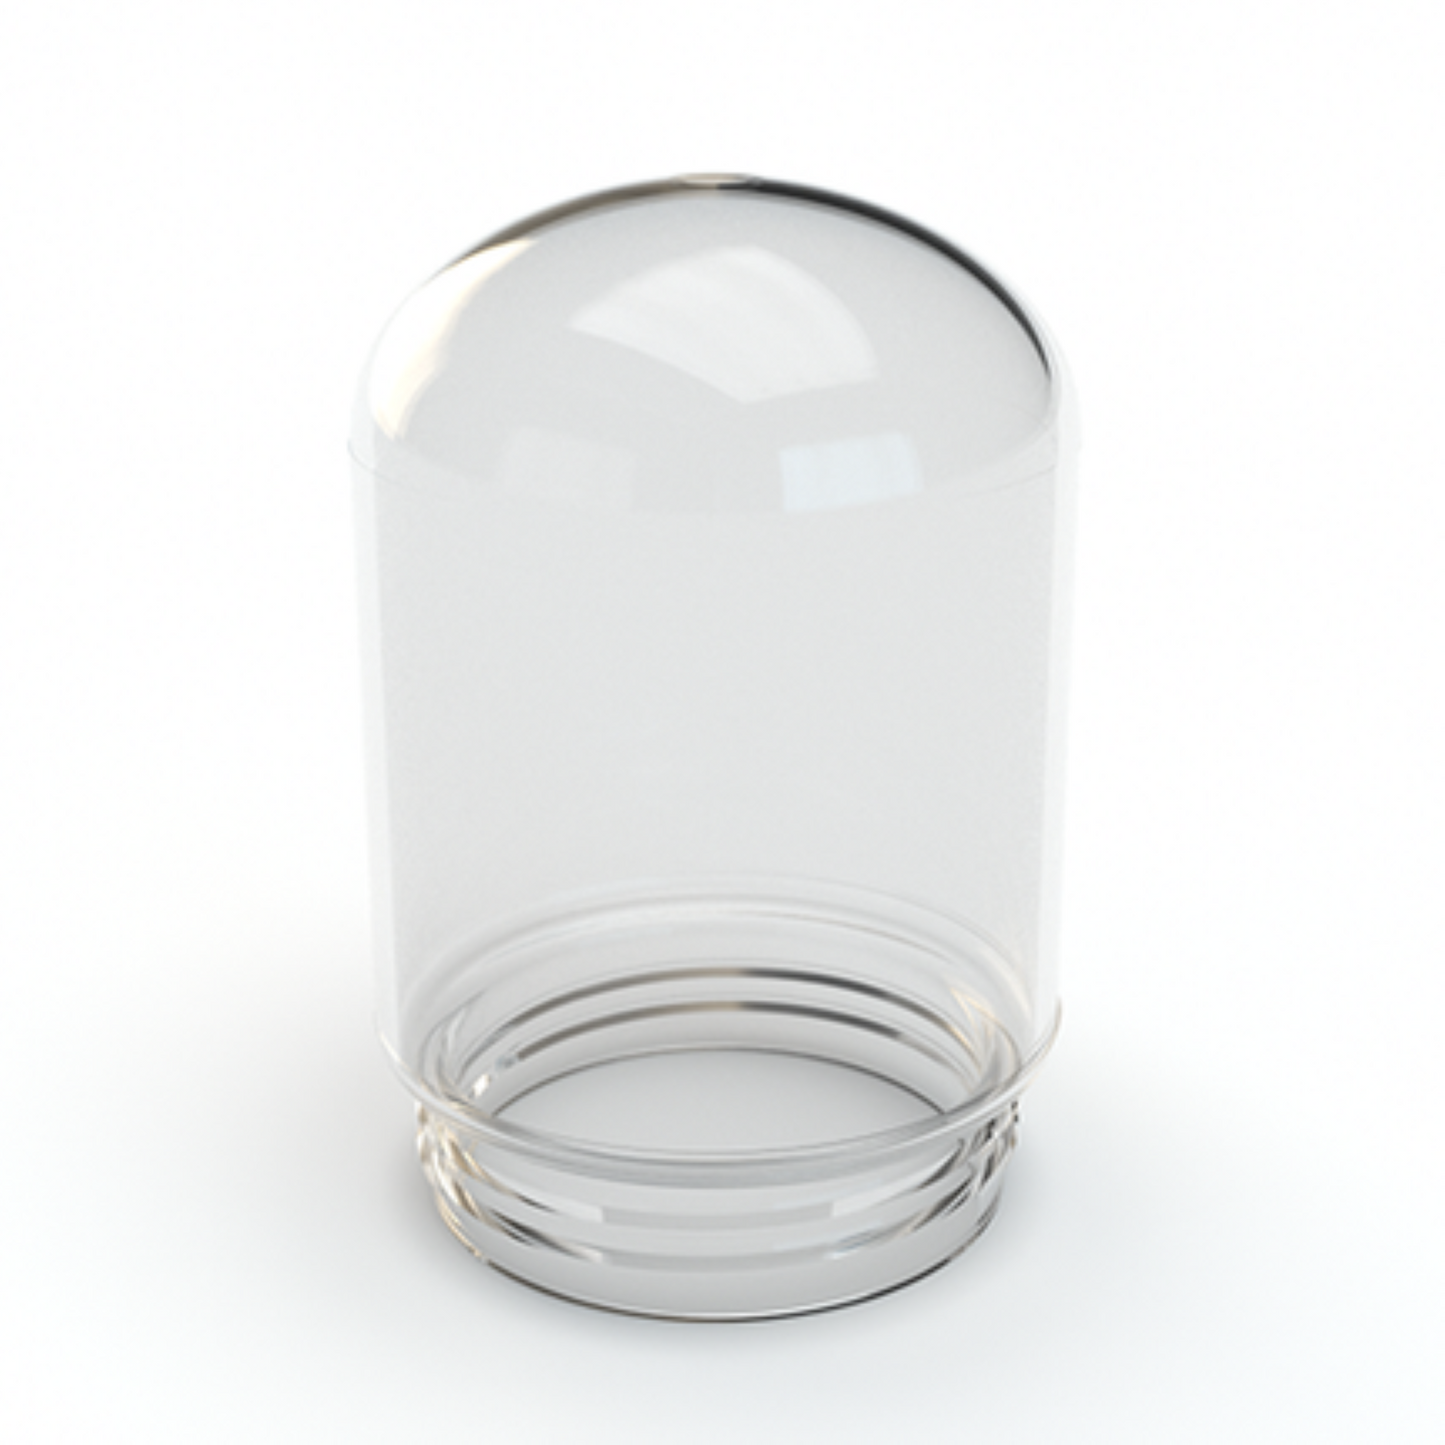 Stündenglass Replacement Glass Globe - Small by Stündenglass | Mission Dispensary